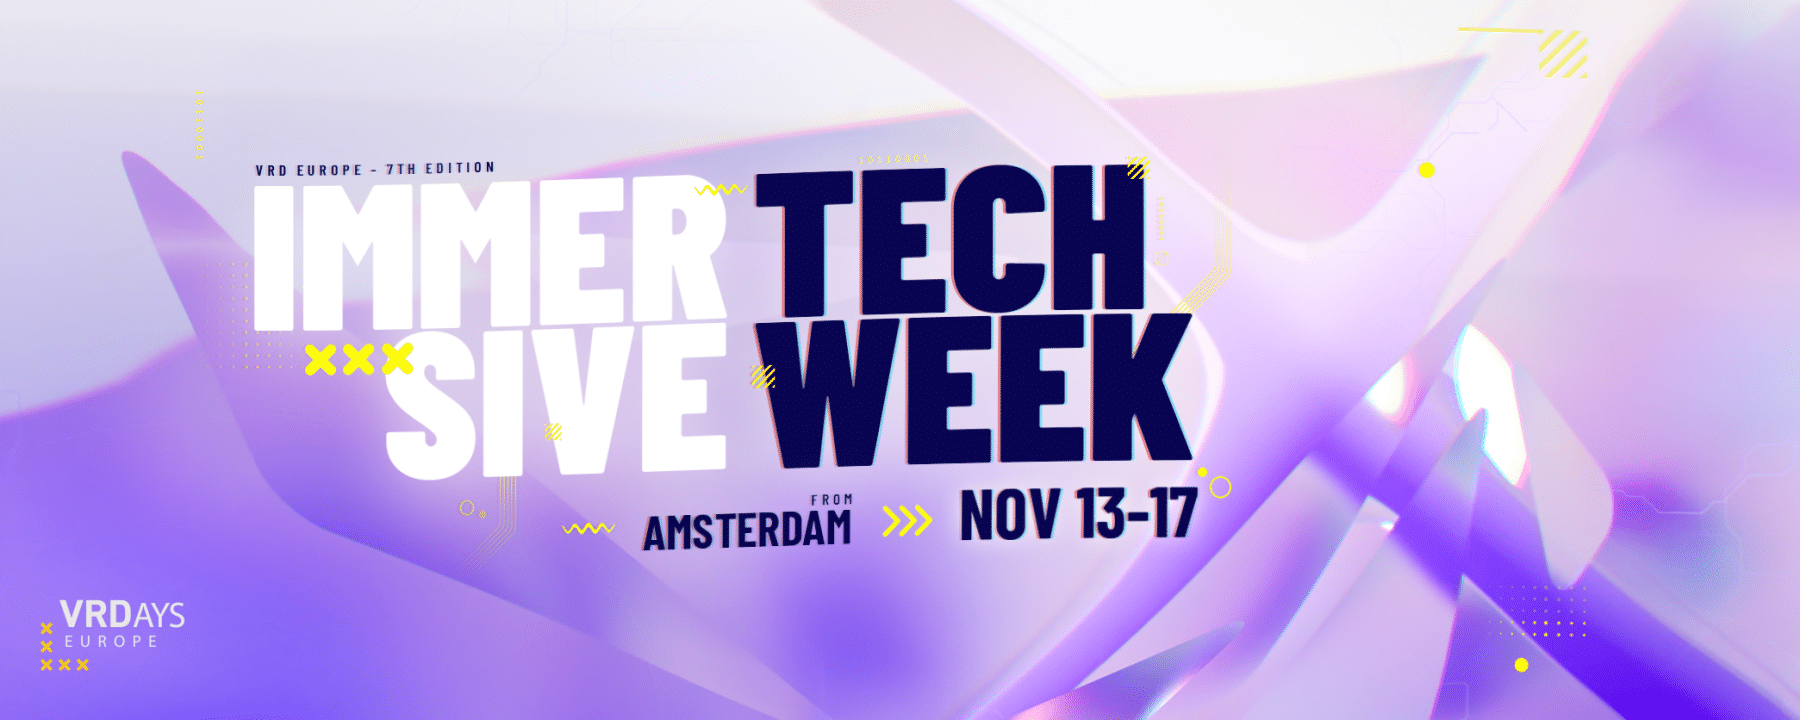 Vrdays europe - Immersive Tech week